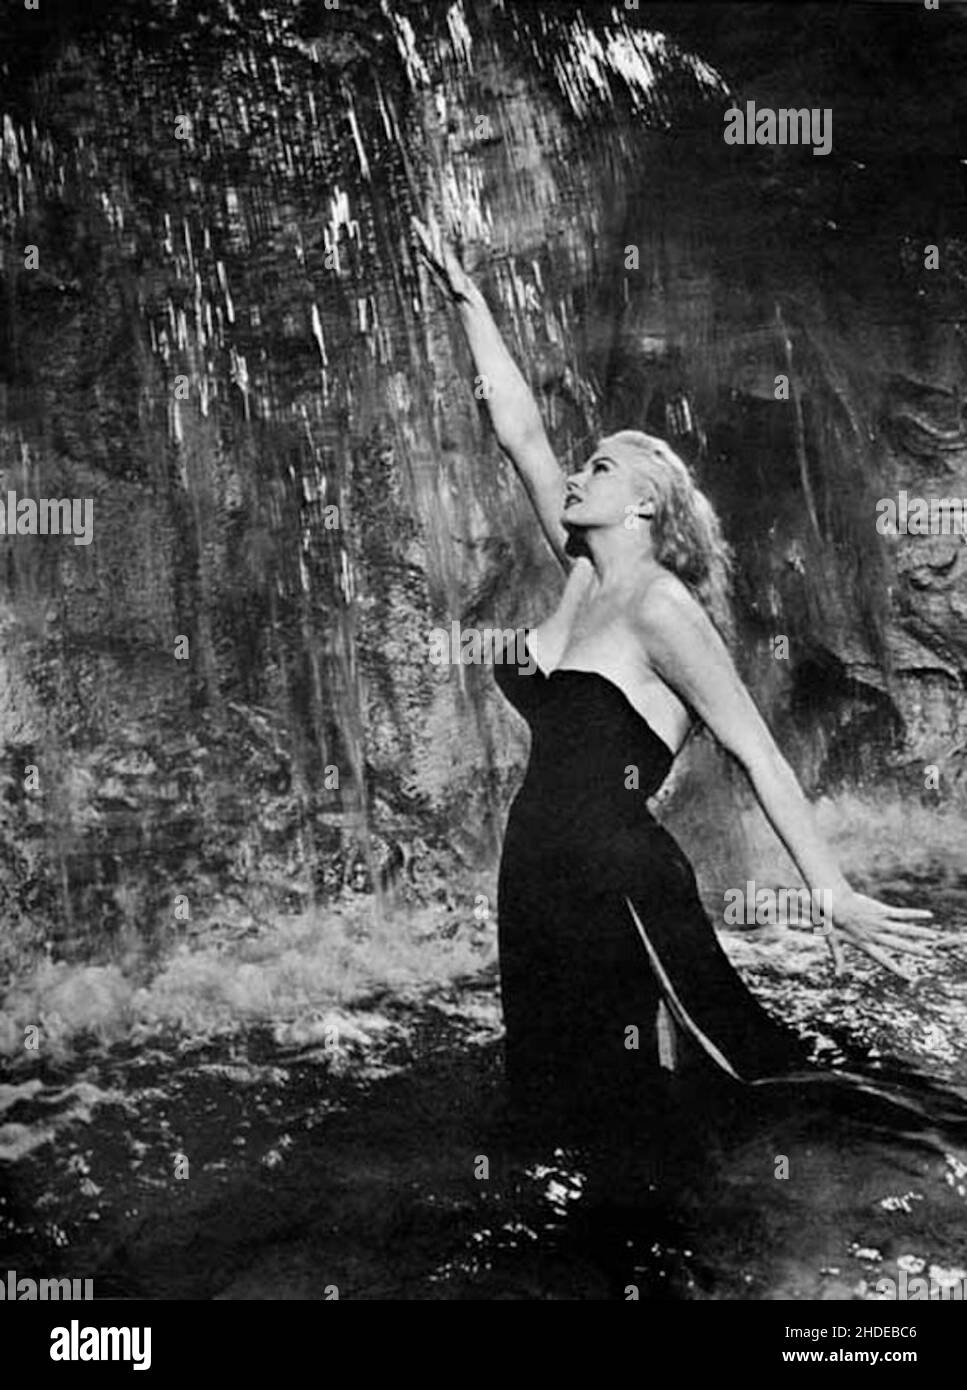 Anita Ekberg en la famosa escena emblemática de la Fontana de Trevi de la película La Dolce Vita - The Sweet Life del director de cine italiano Frederico Fellini, Foto de stock